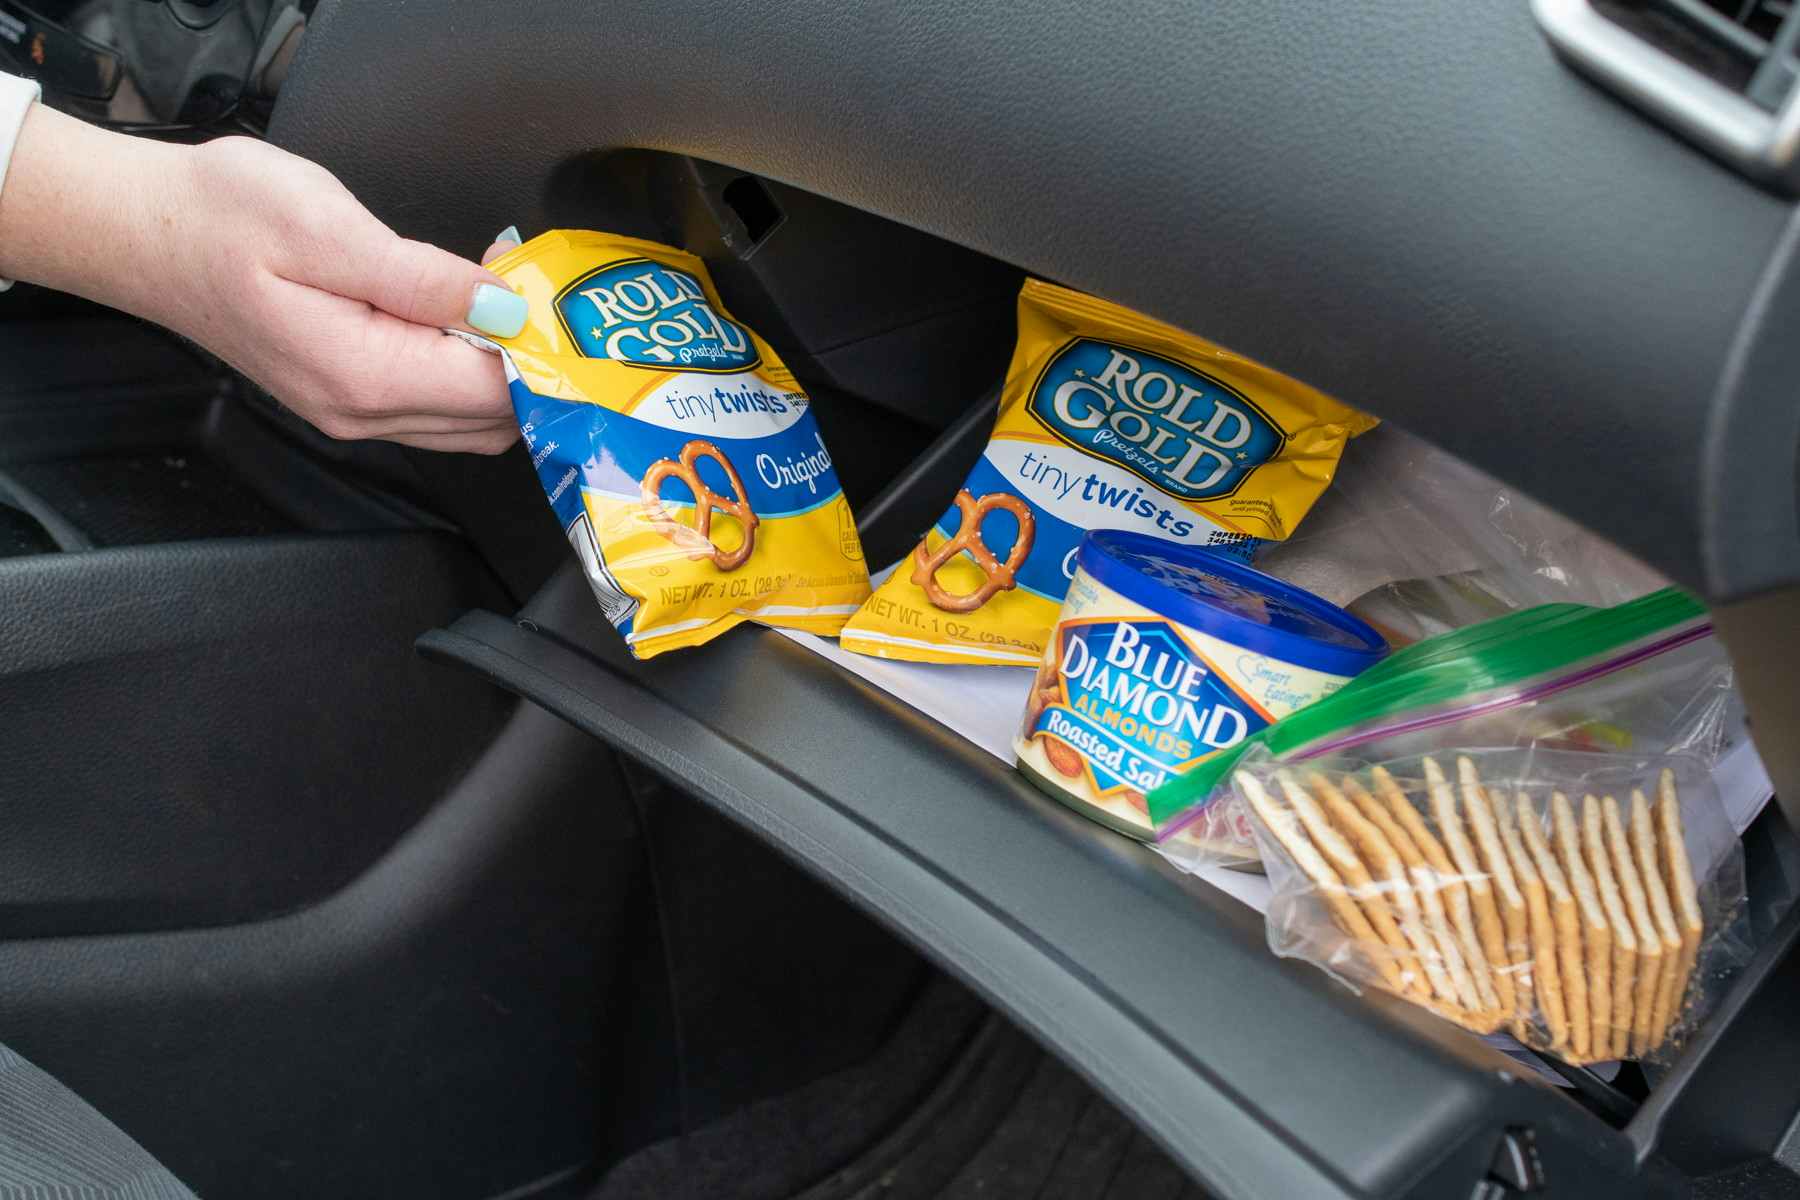 A person holding a bag of pretzels in a car.